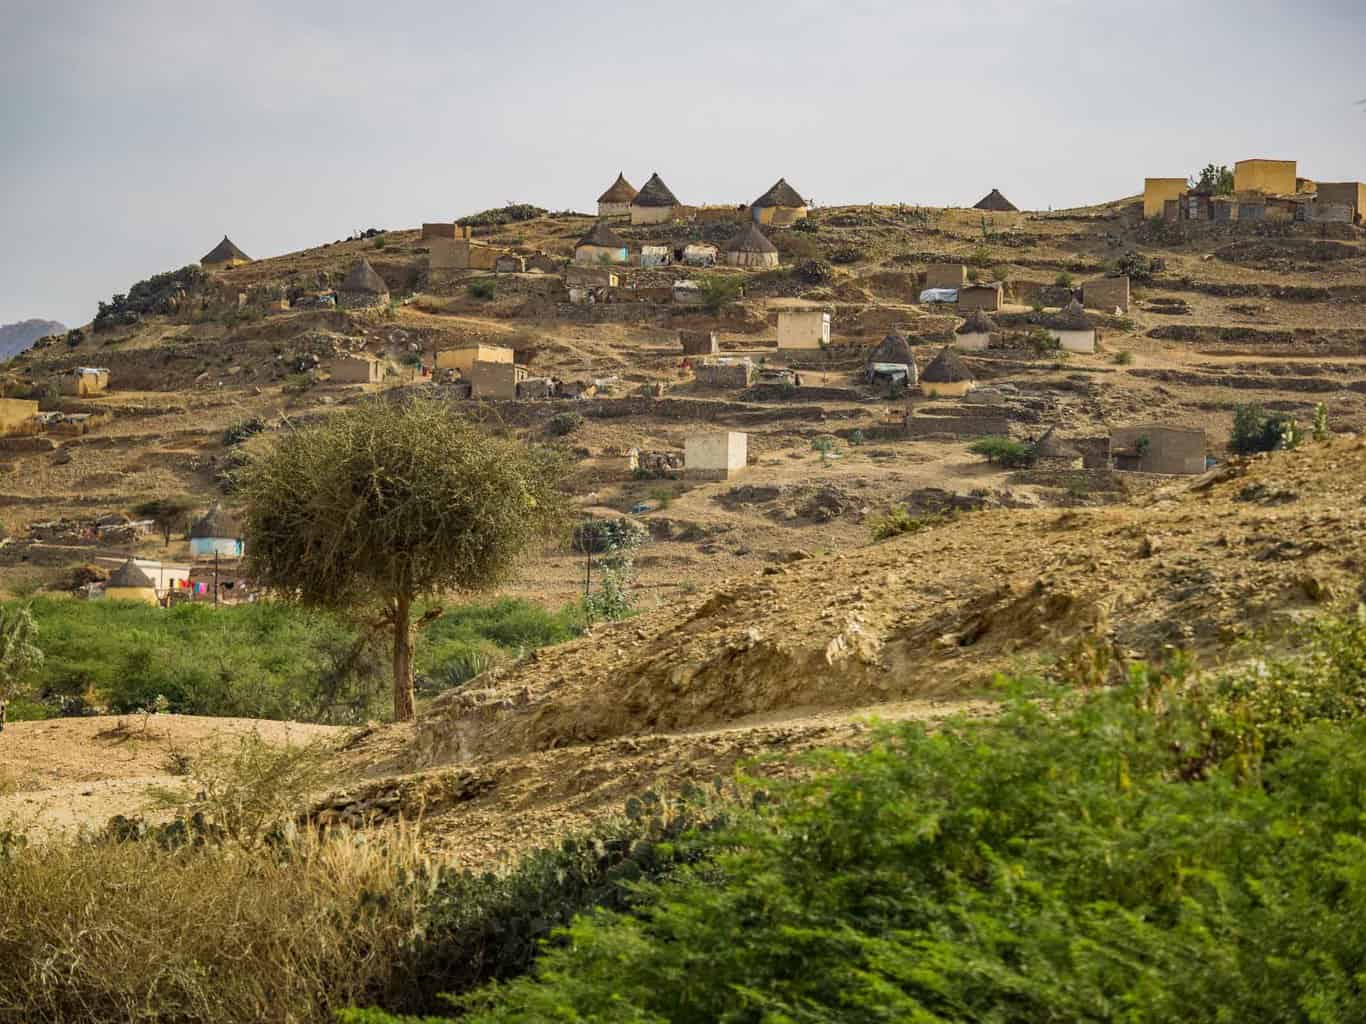 local village in Eritrea